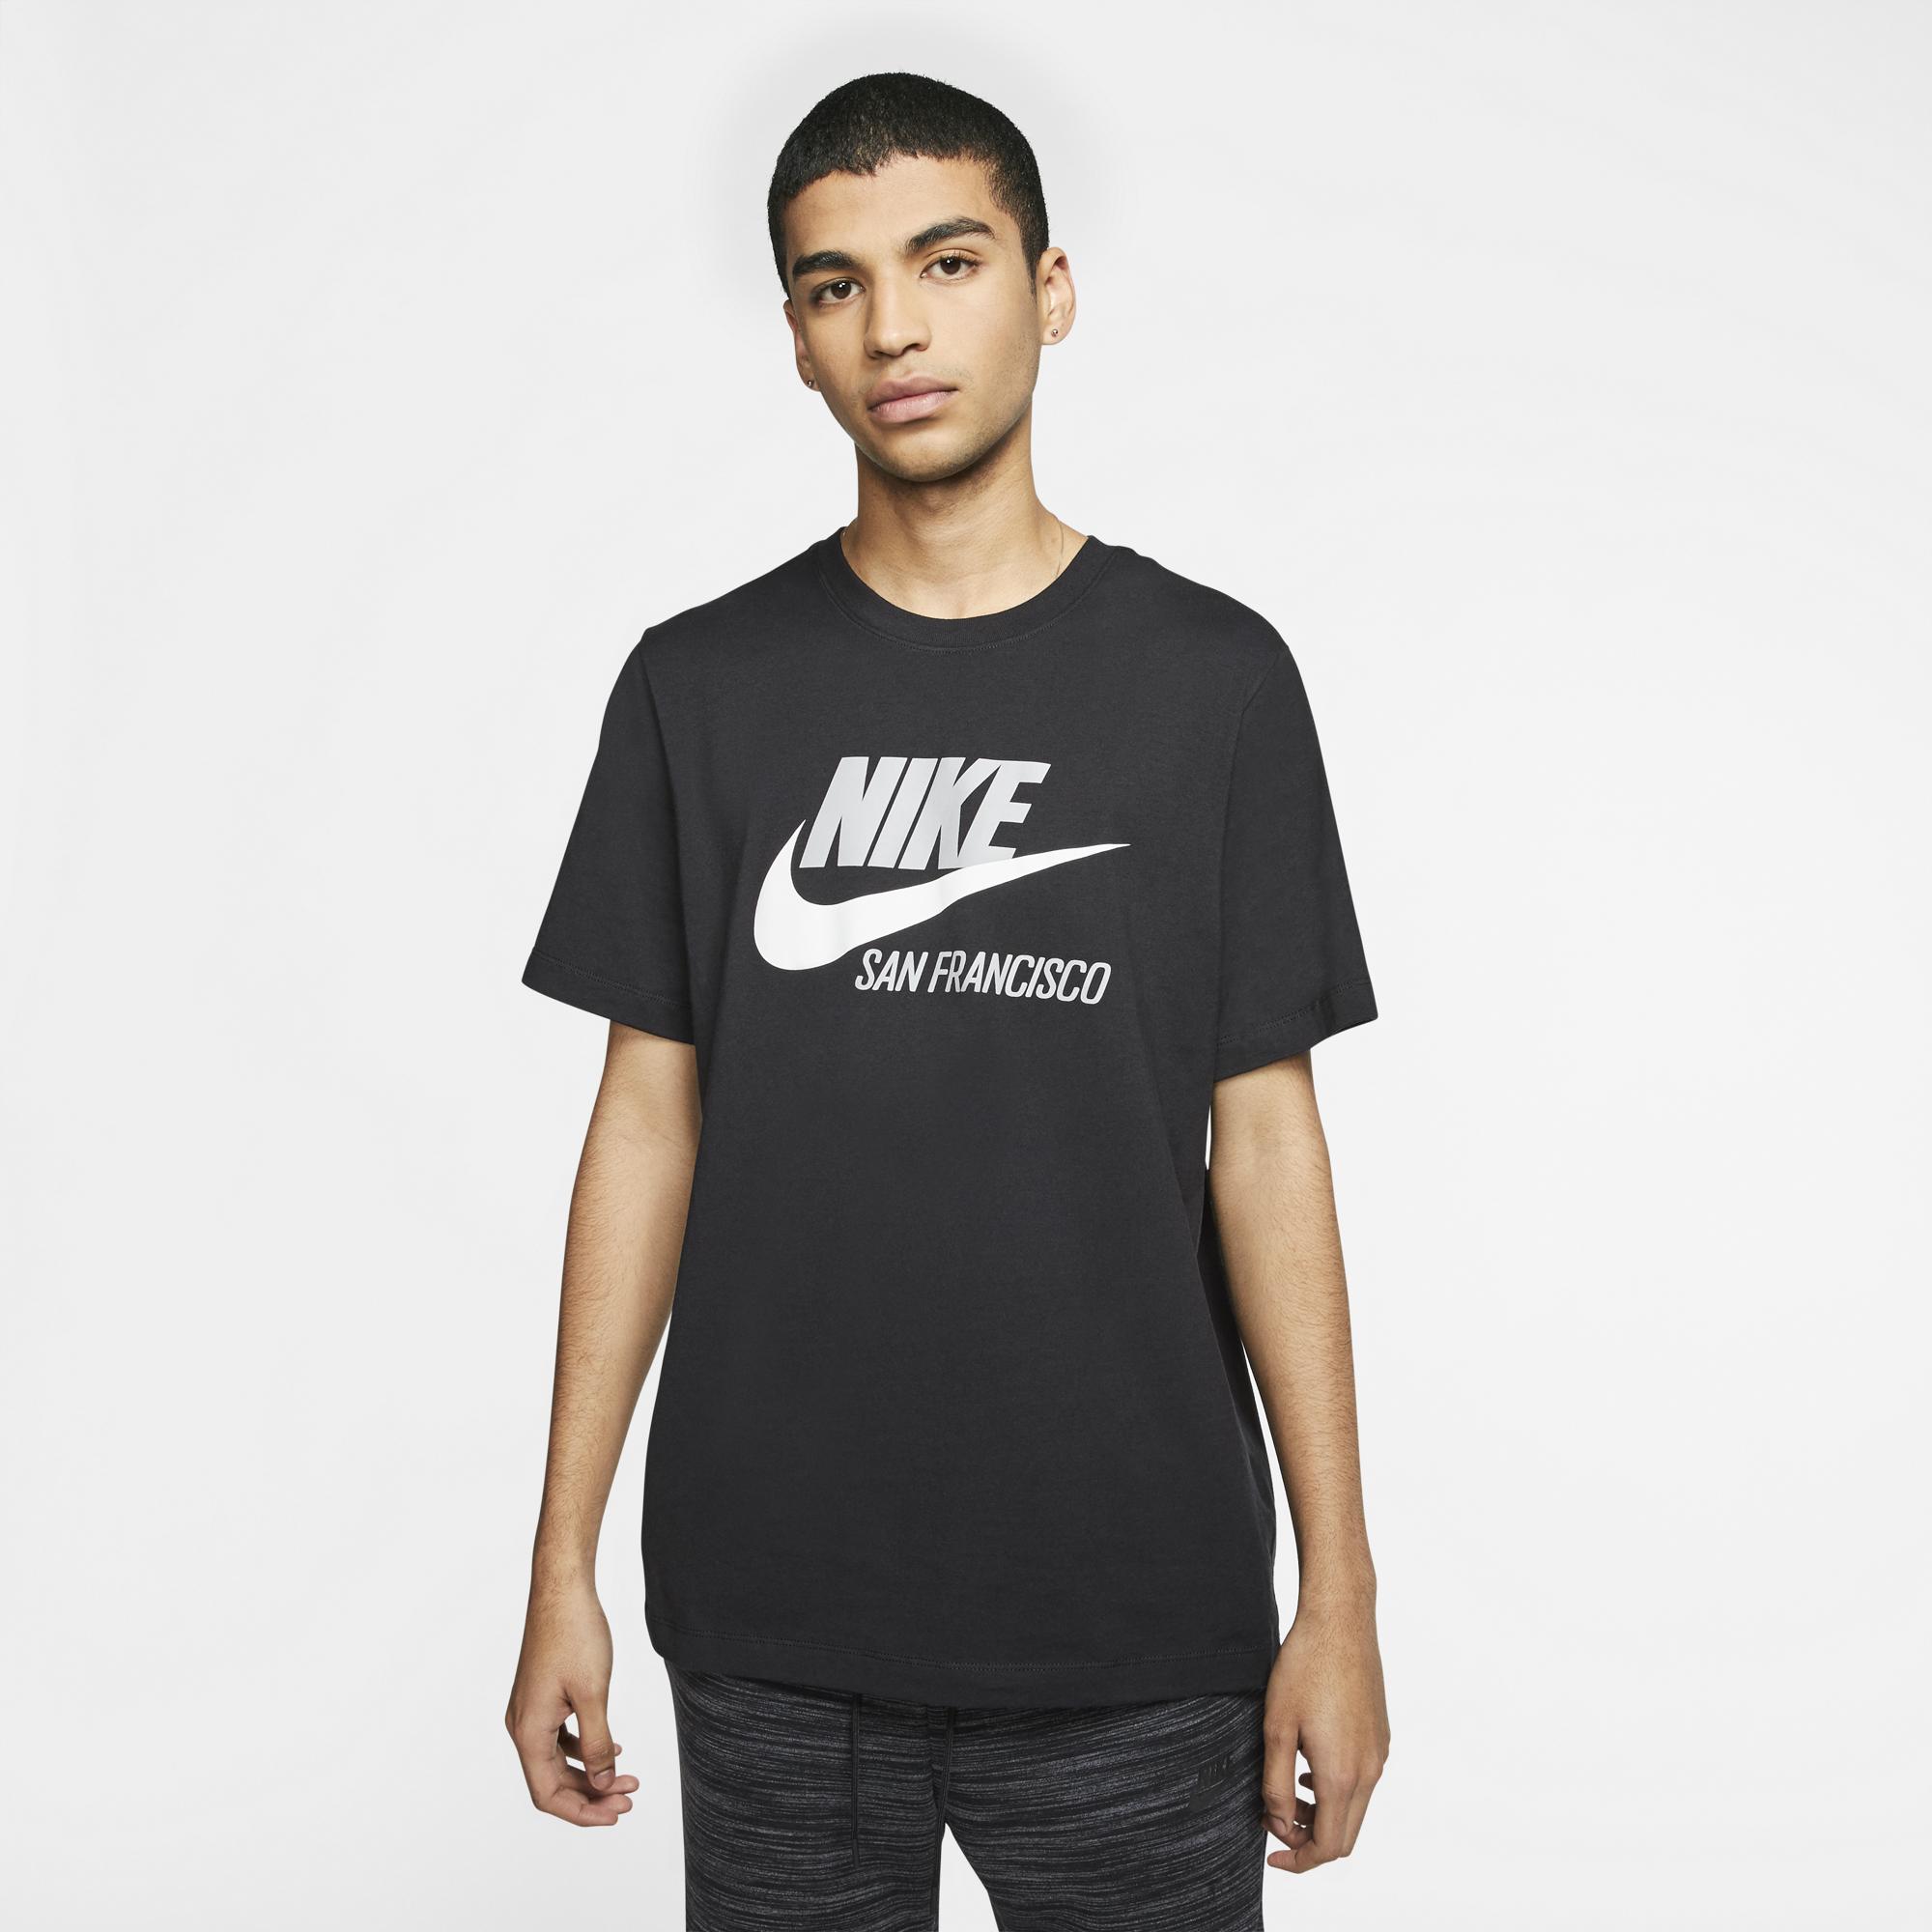 Nike Cotton Nsw City T-shirt in Black/White (Black) for Men - Save 20% ...